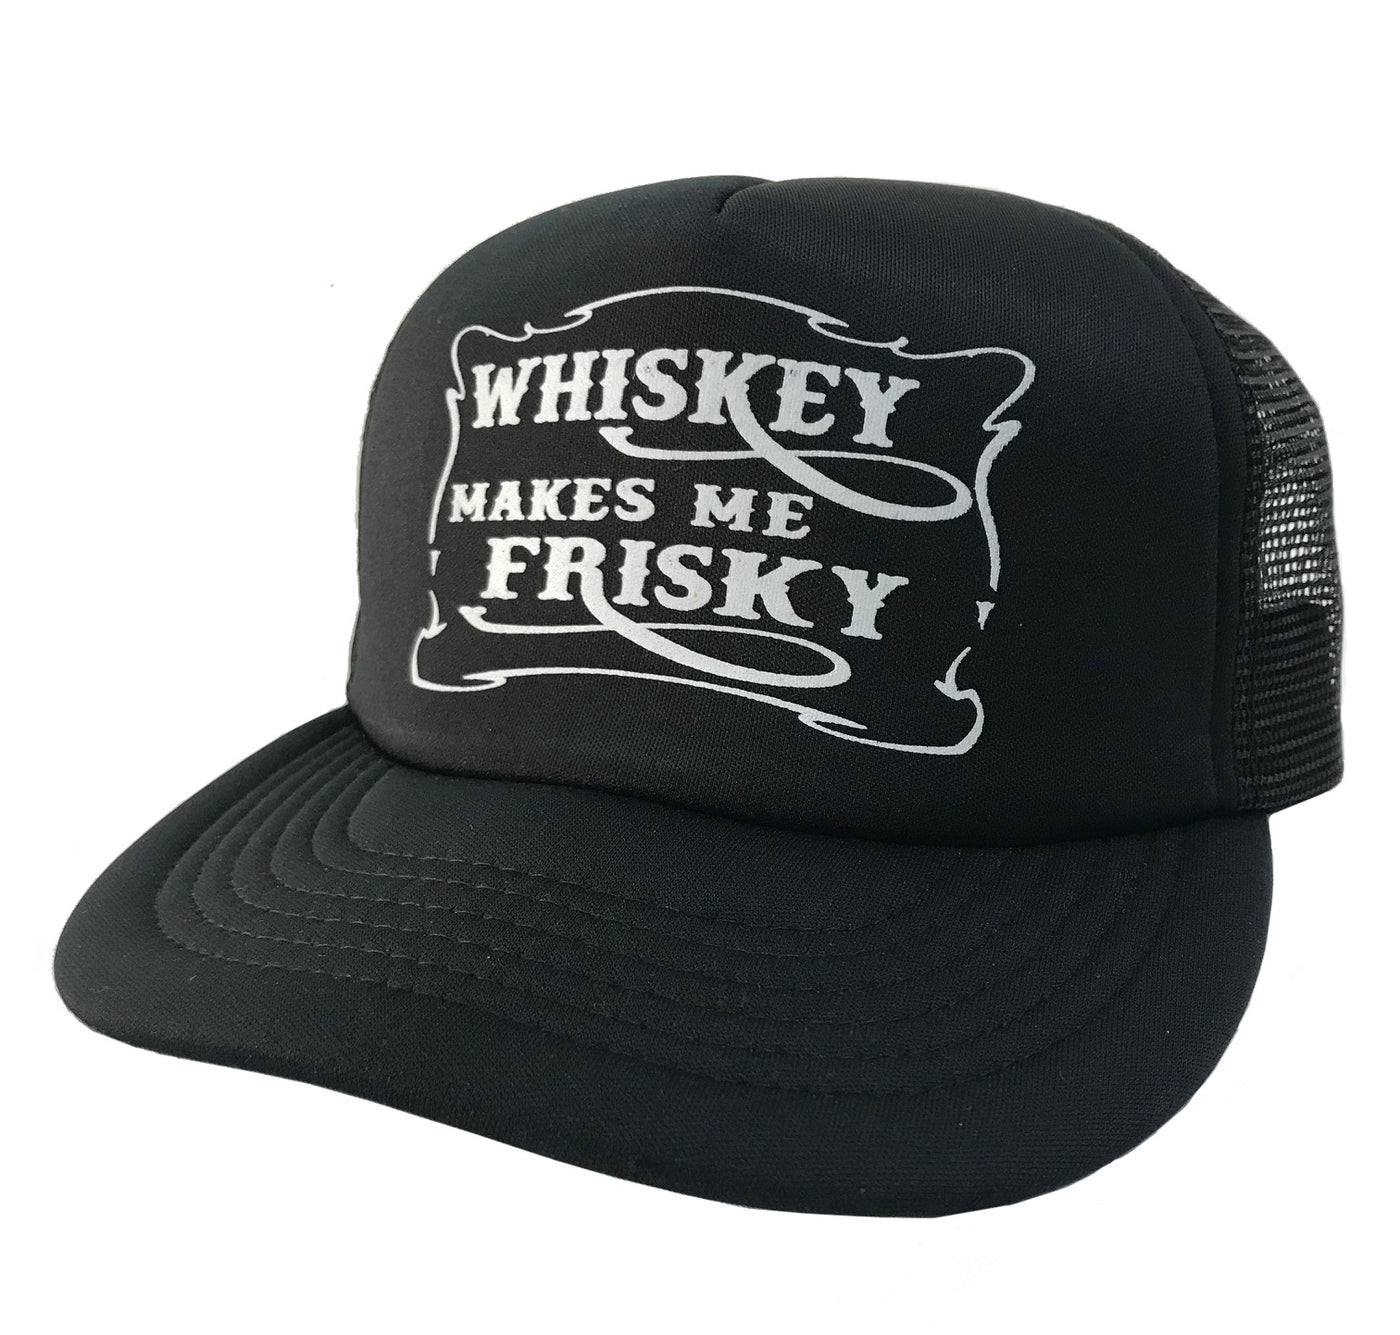 WHISKEY MAKES ME FRISKY TRUCKER HAT - Trailsclothing.com